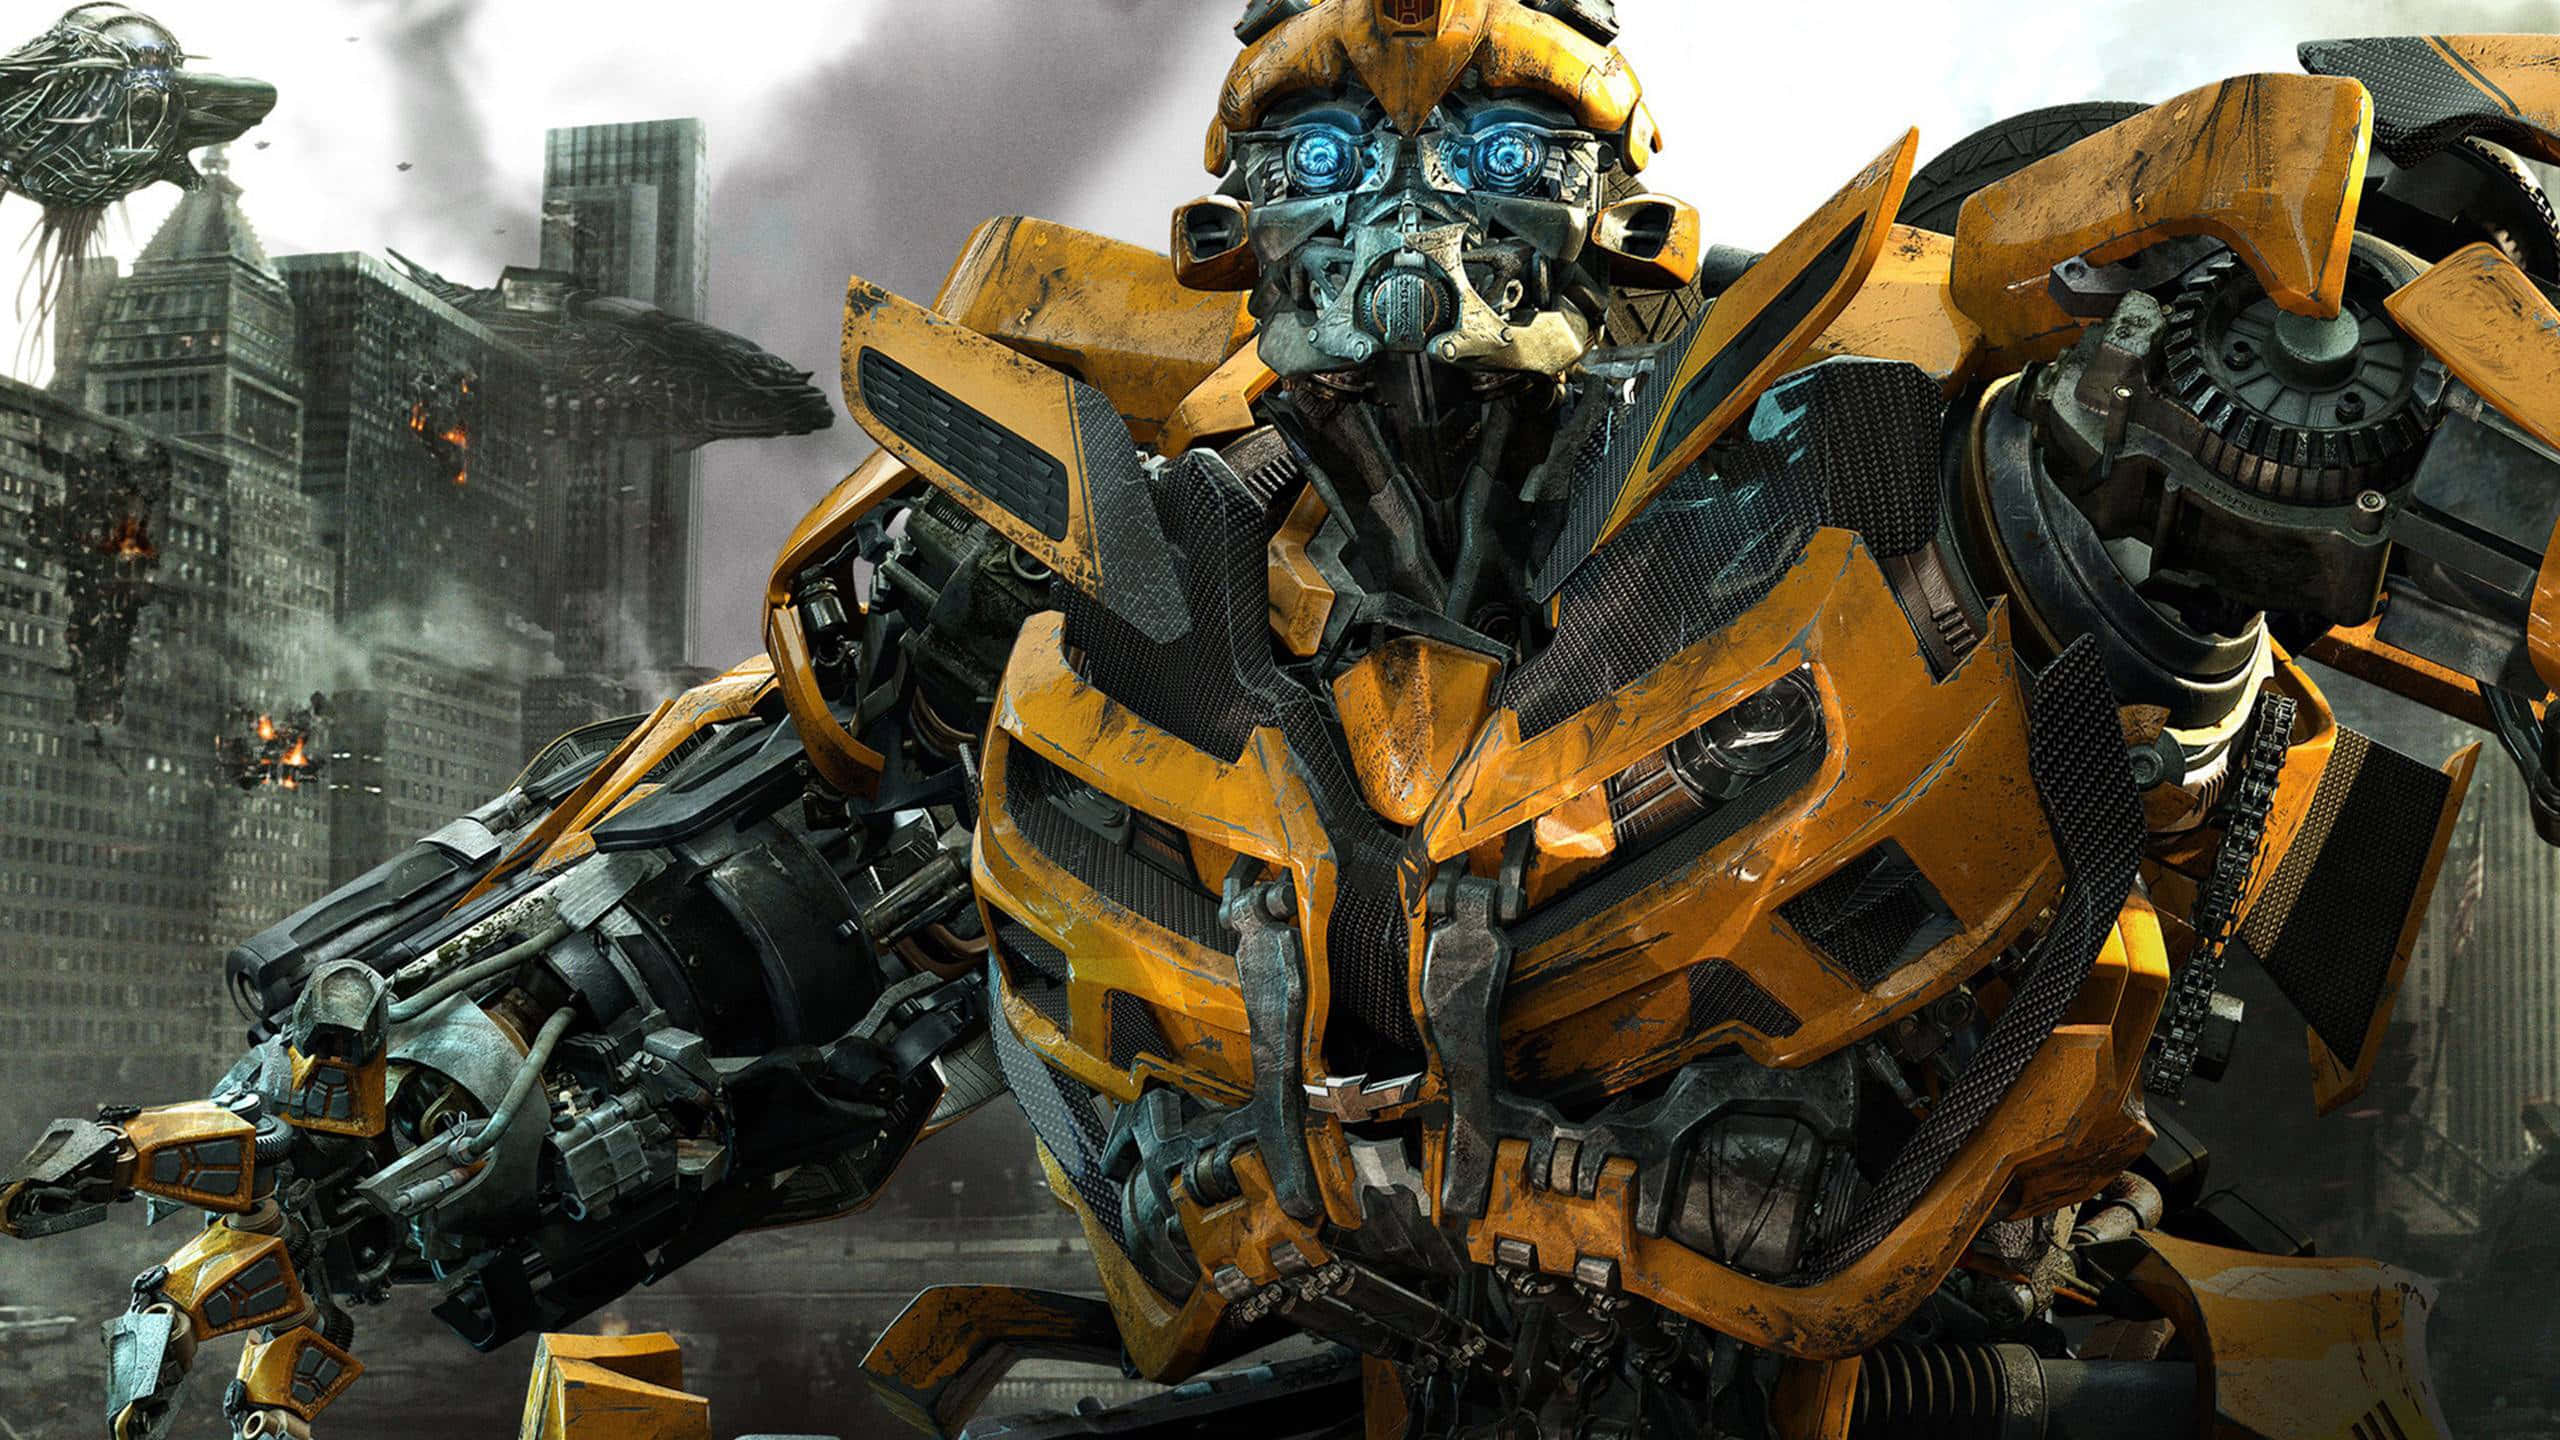 Transformersder Letzte Ritter - Bumblebee